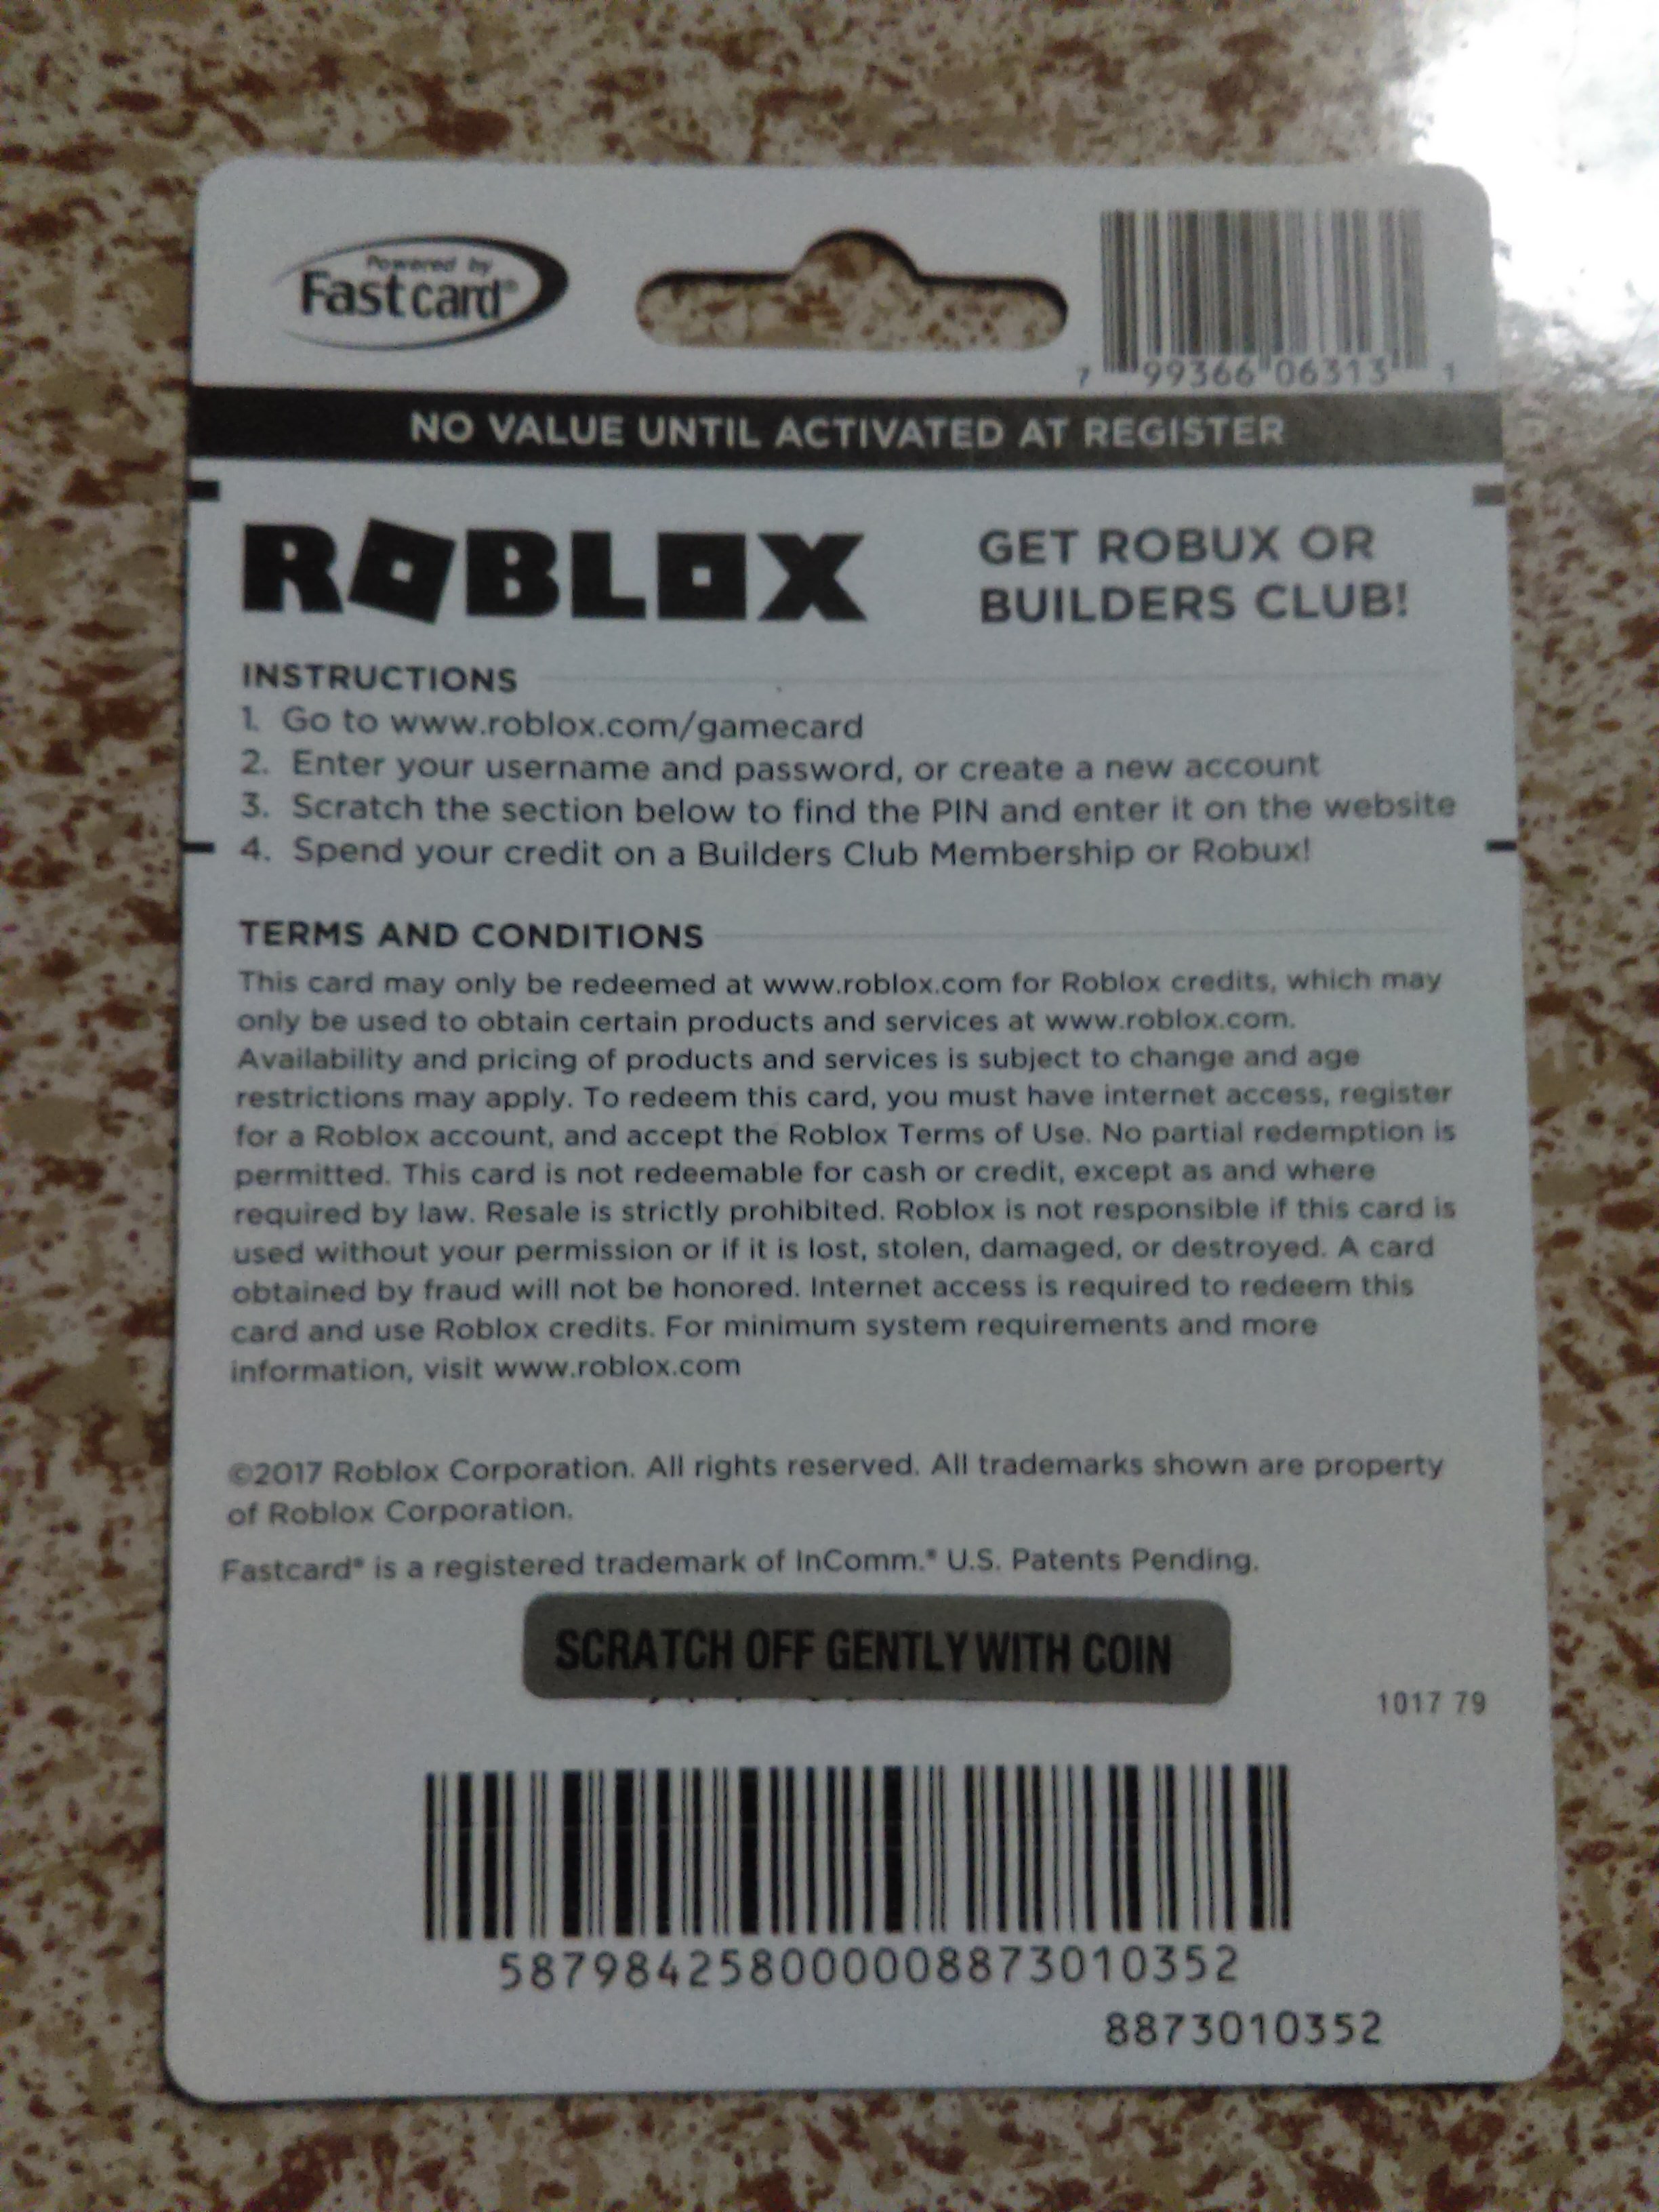 Roblox com gamecards. Roblox Card. Roblox Gift Card. Подарочная карта Roblox. Redeem Roblox Card.